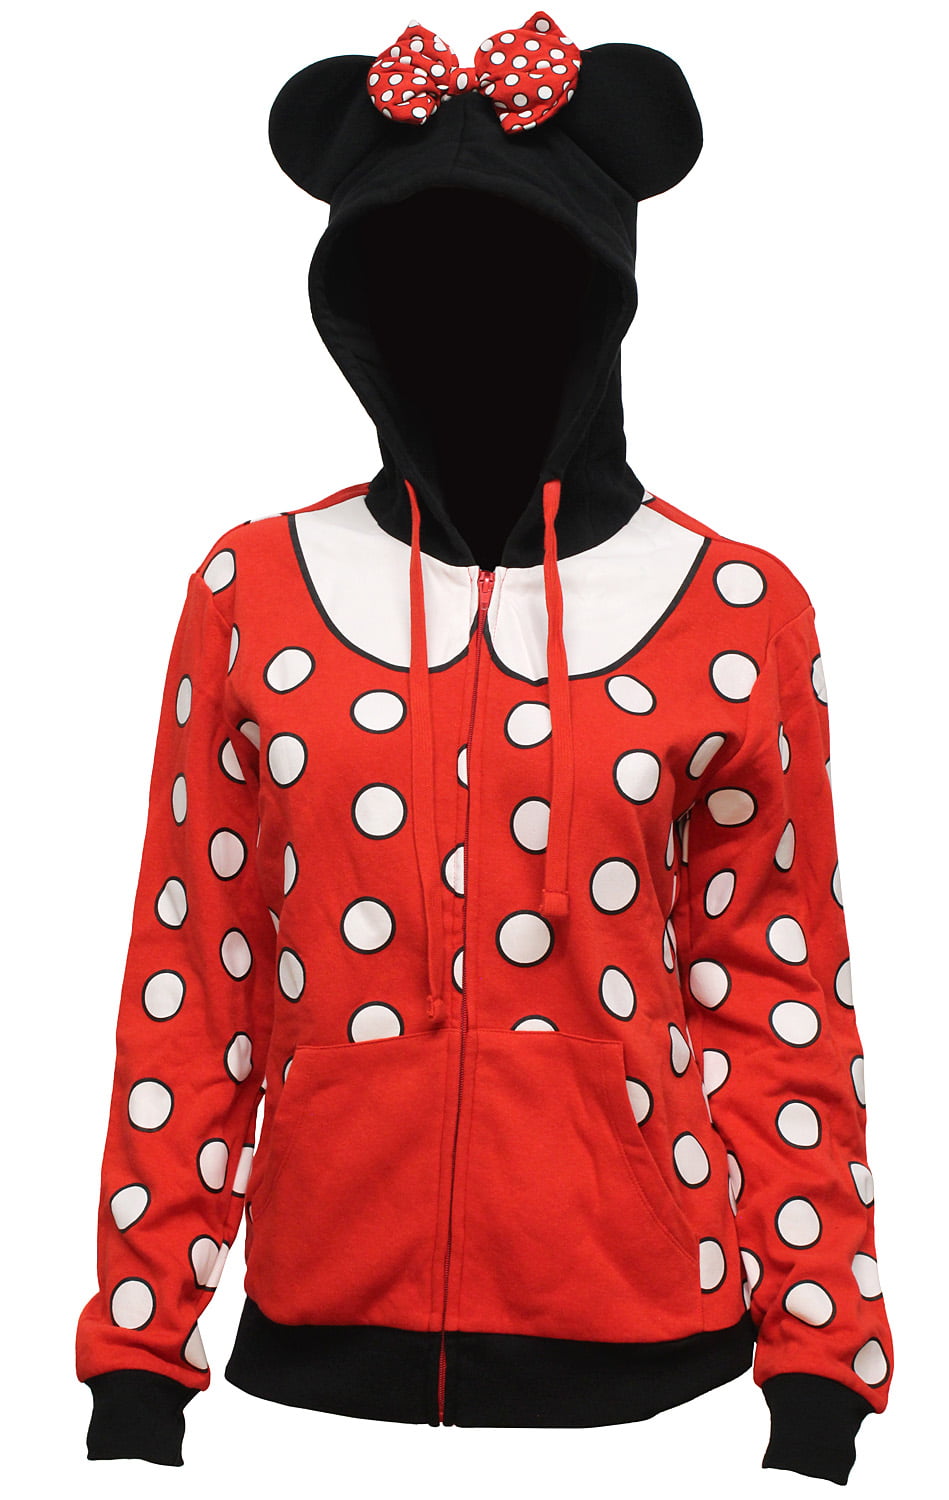 NWT Disney Mickey Mouse Polka Dot Hoodie Sweatshirt w/Glitter and Ears on Hood! 